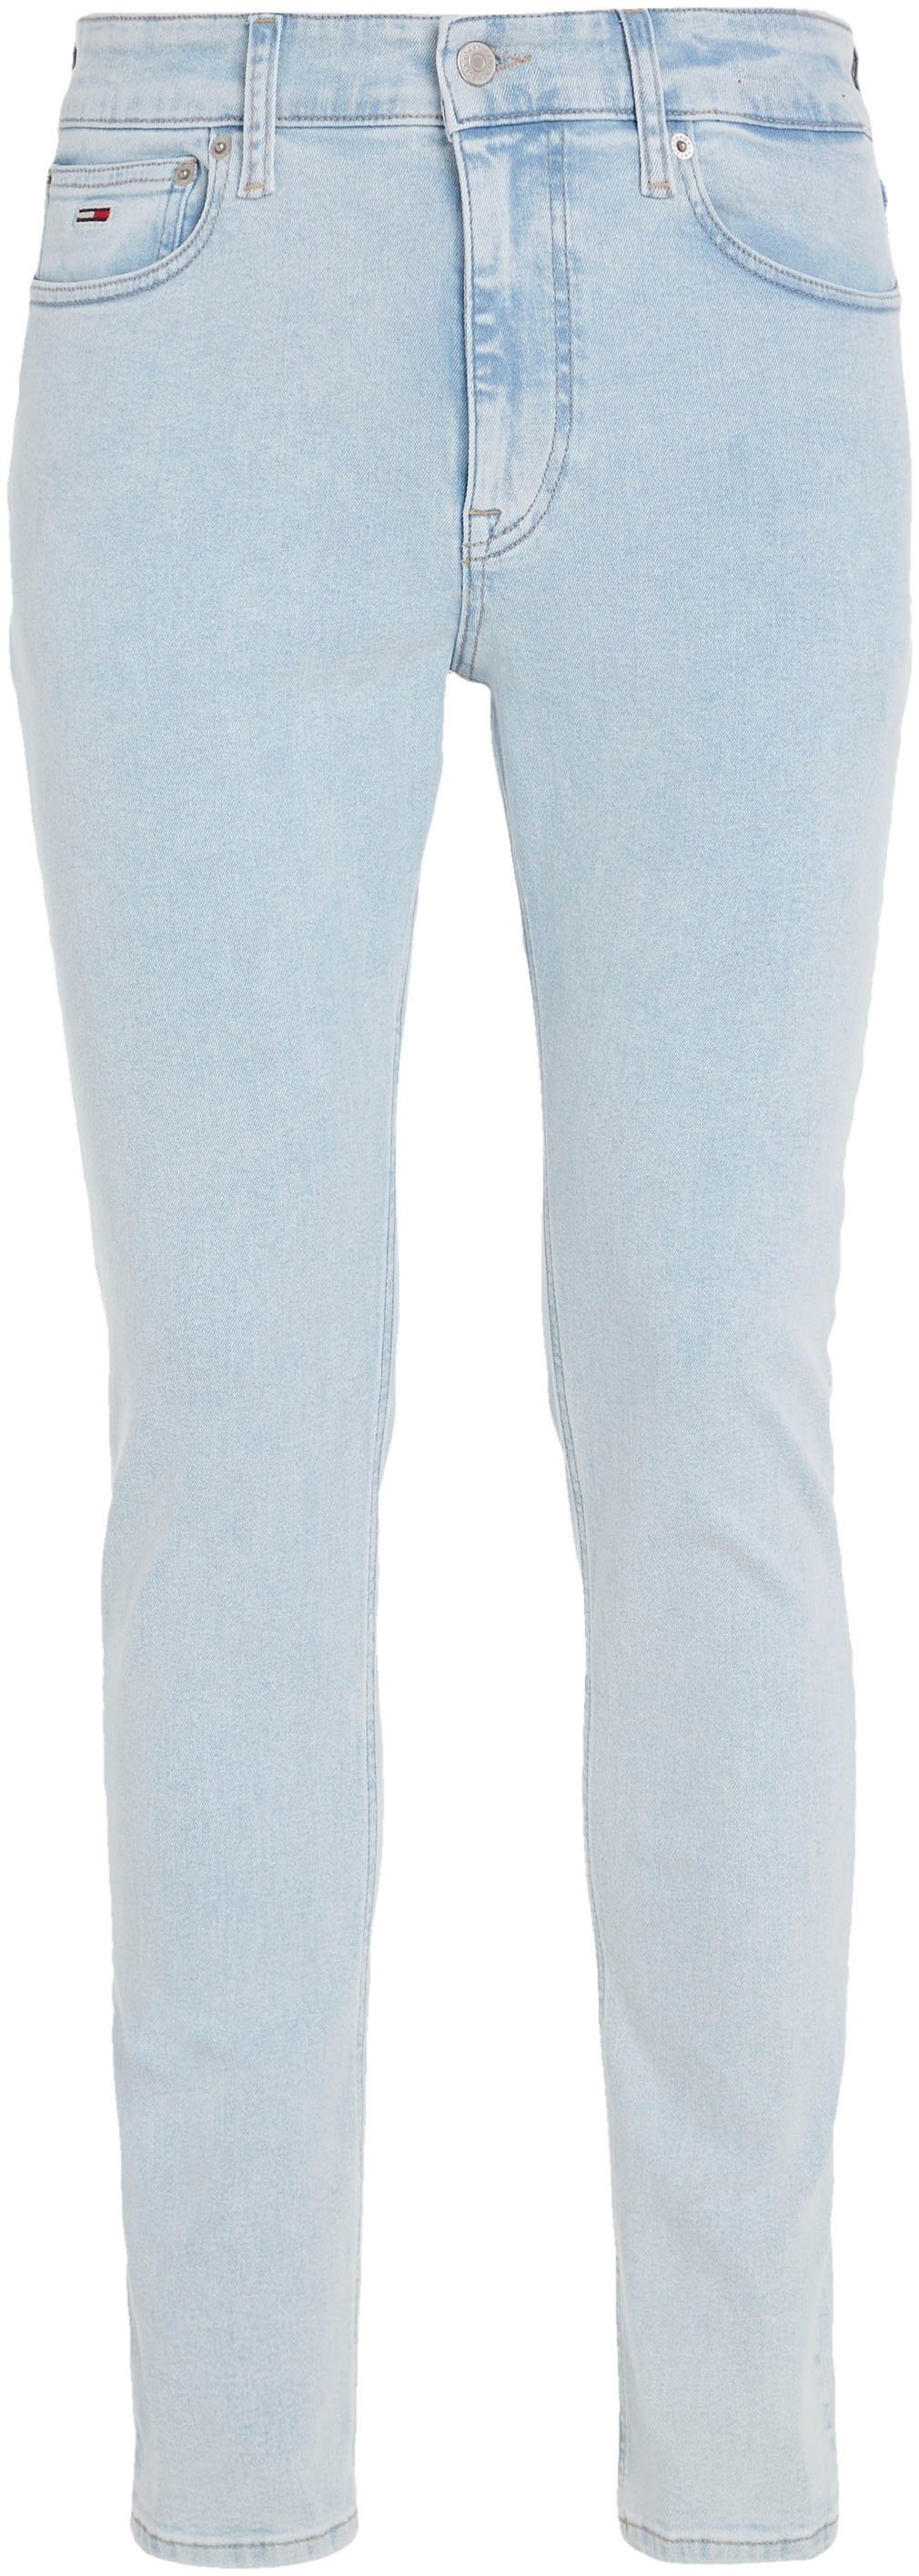 Tommy Jeans Markenlabel DenimLight SKNY SIMON mit Skinny-fit-Jeans